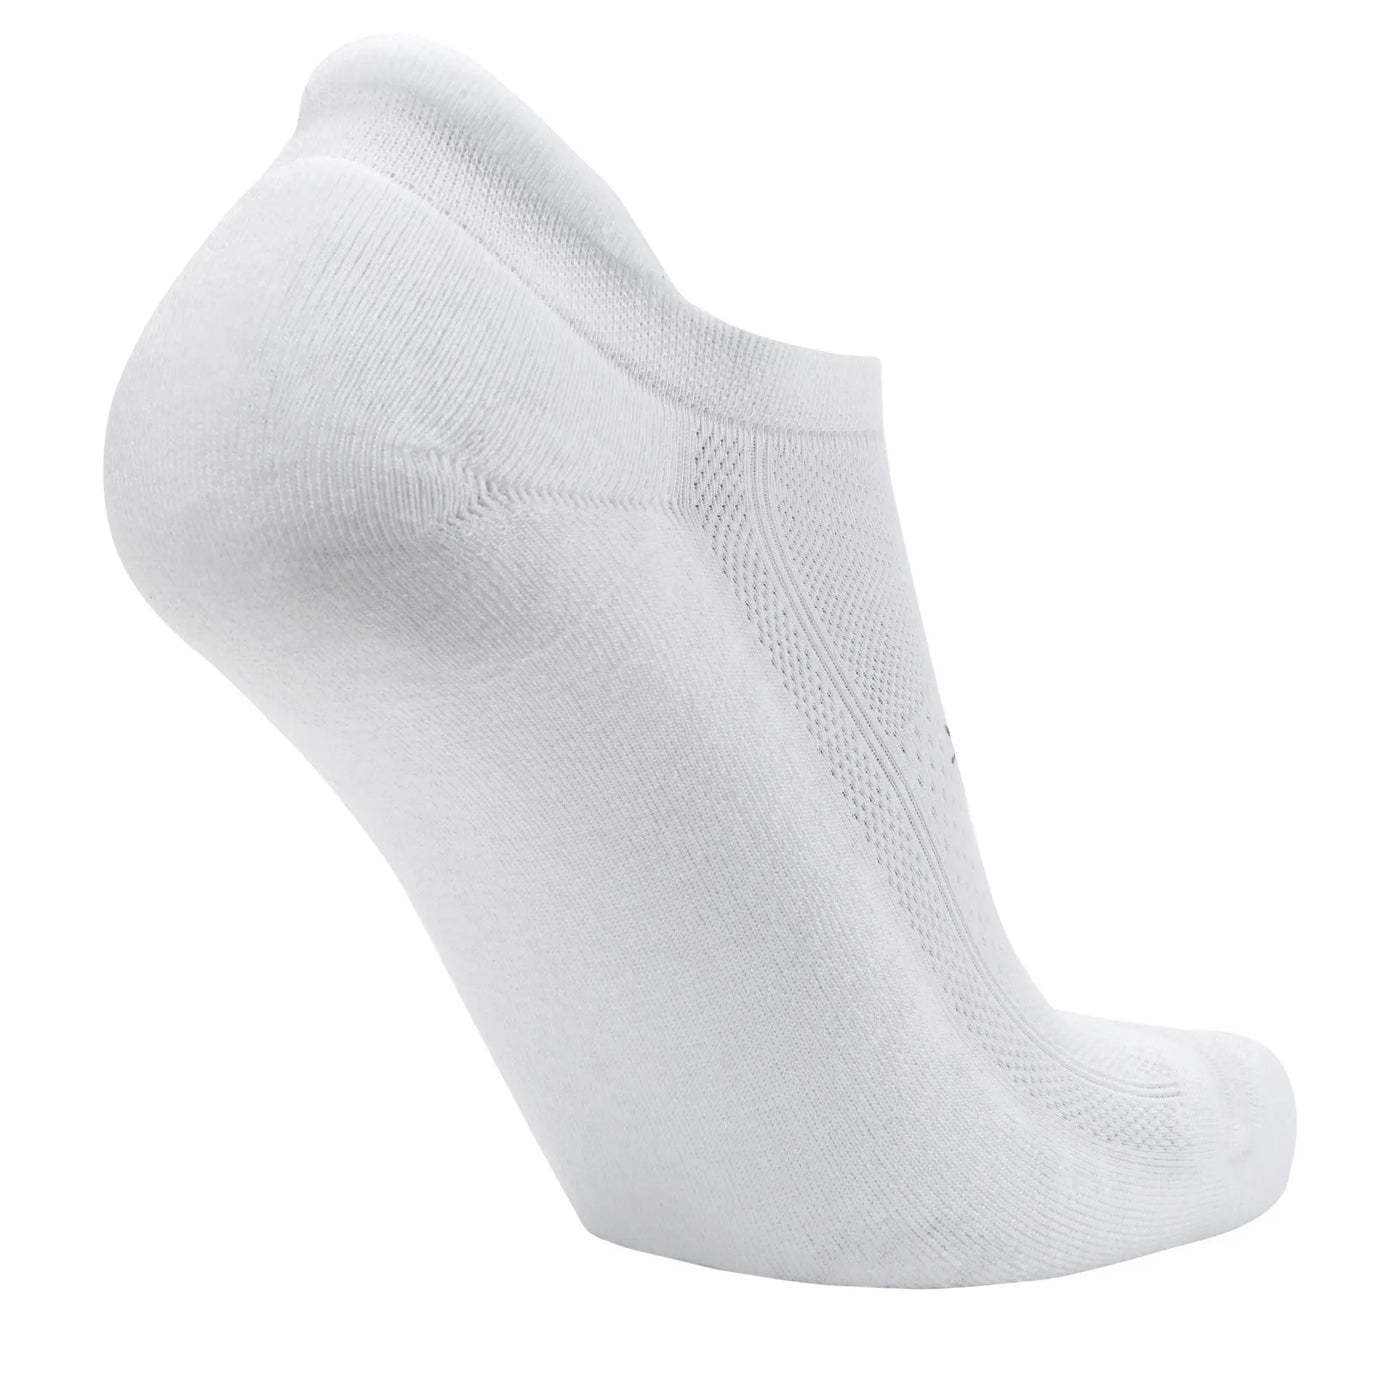 Balega Hidden Comfort No Show Socks - BALE-8025-0200